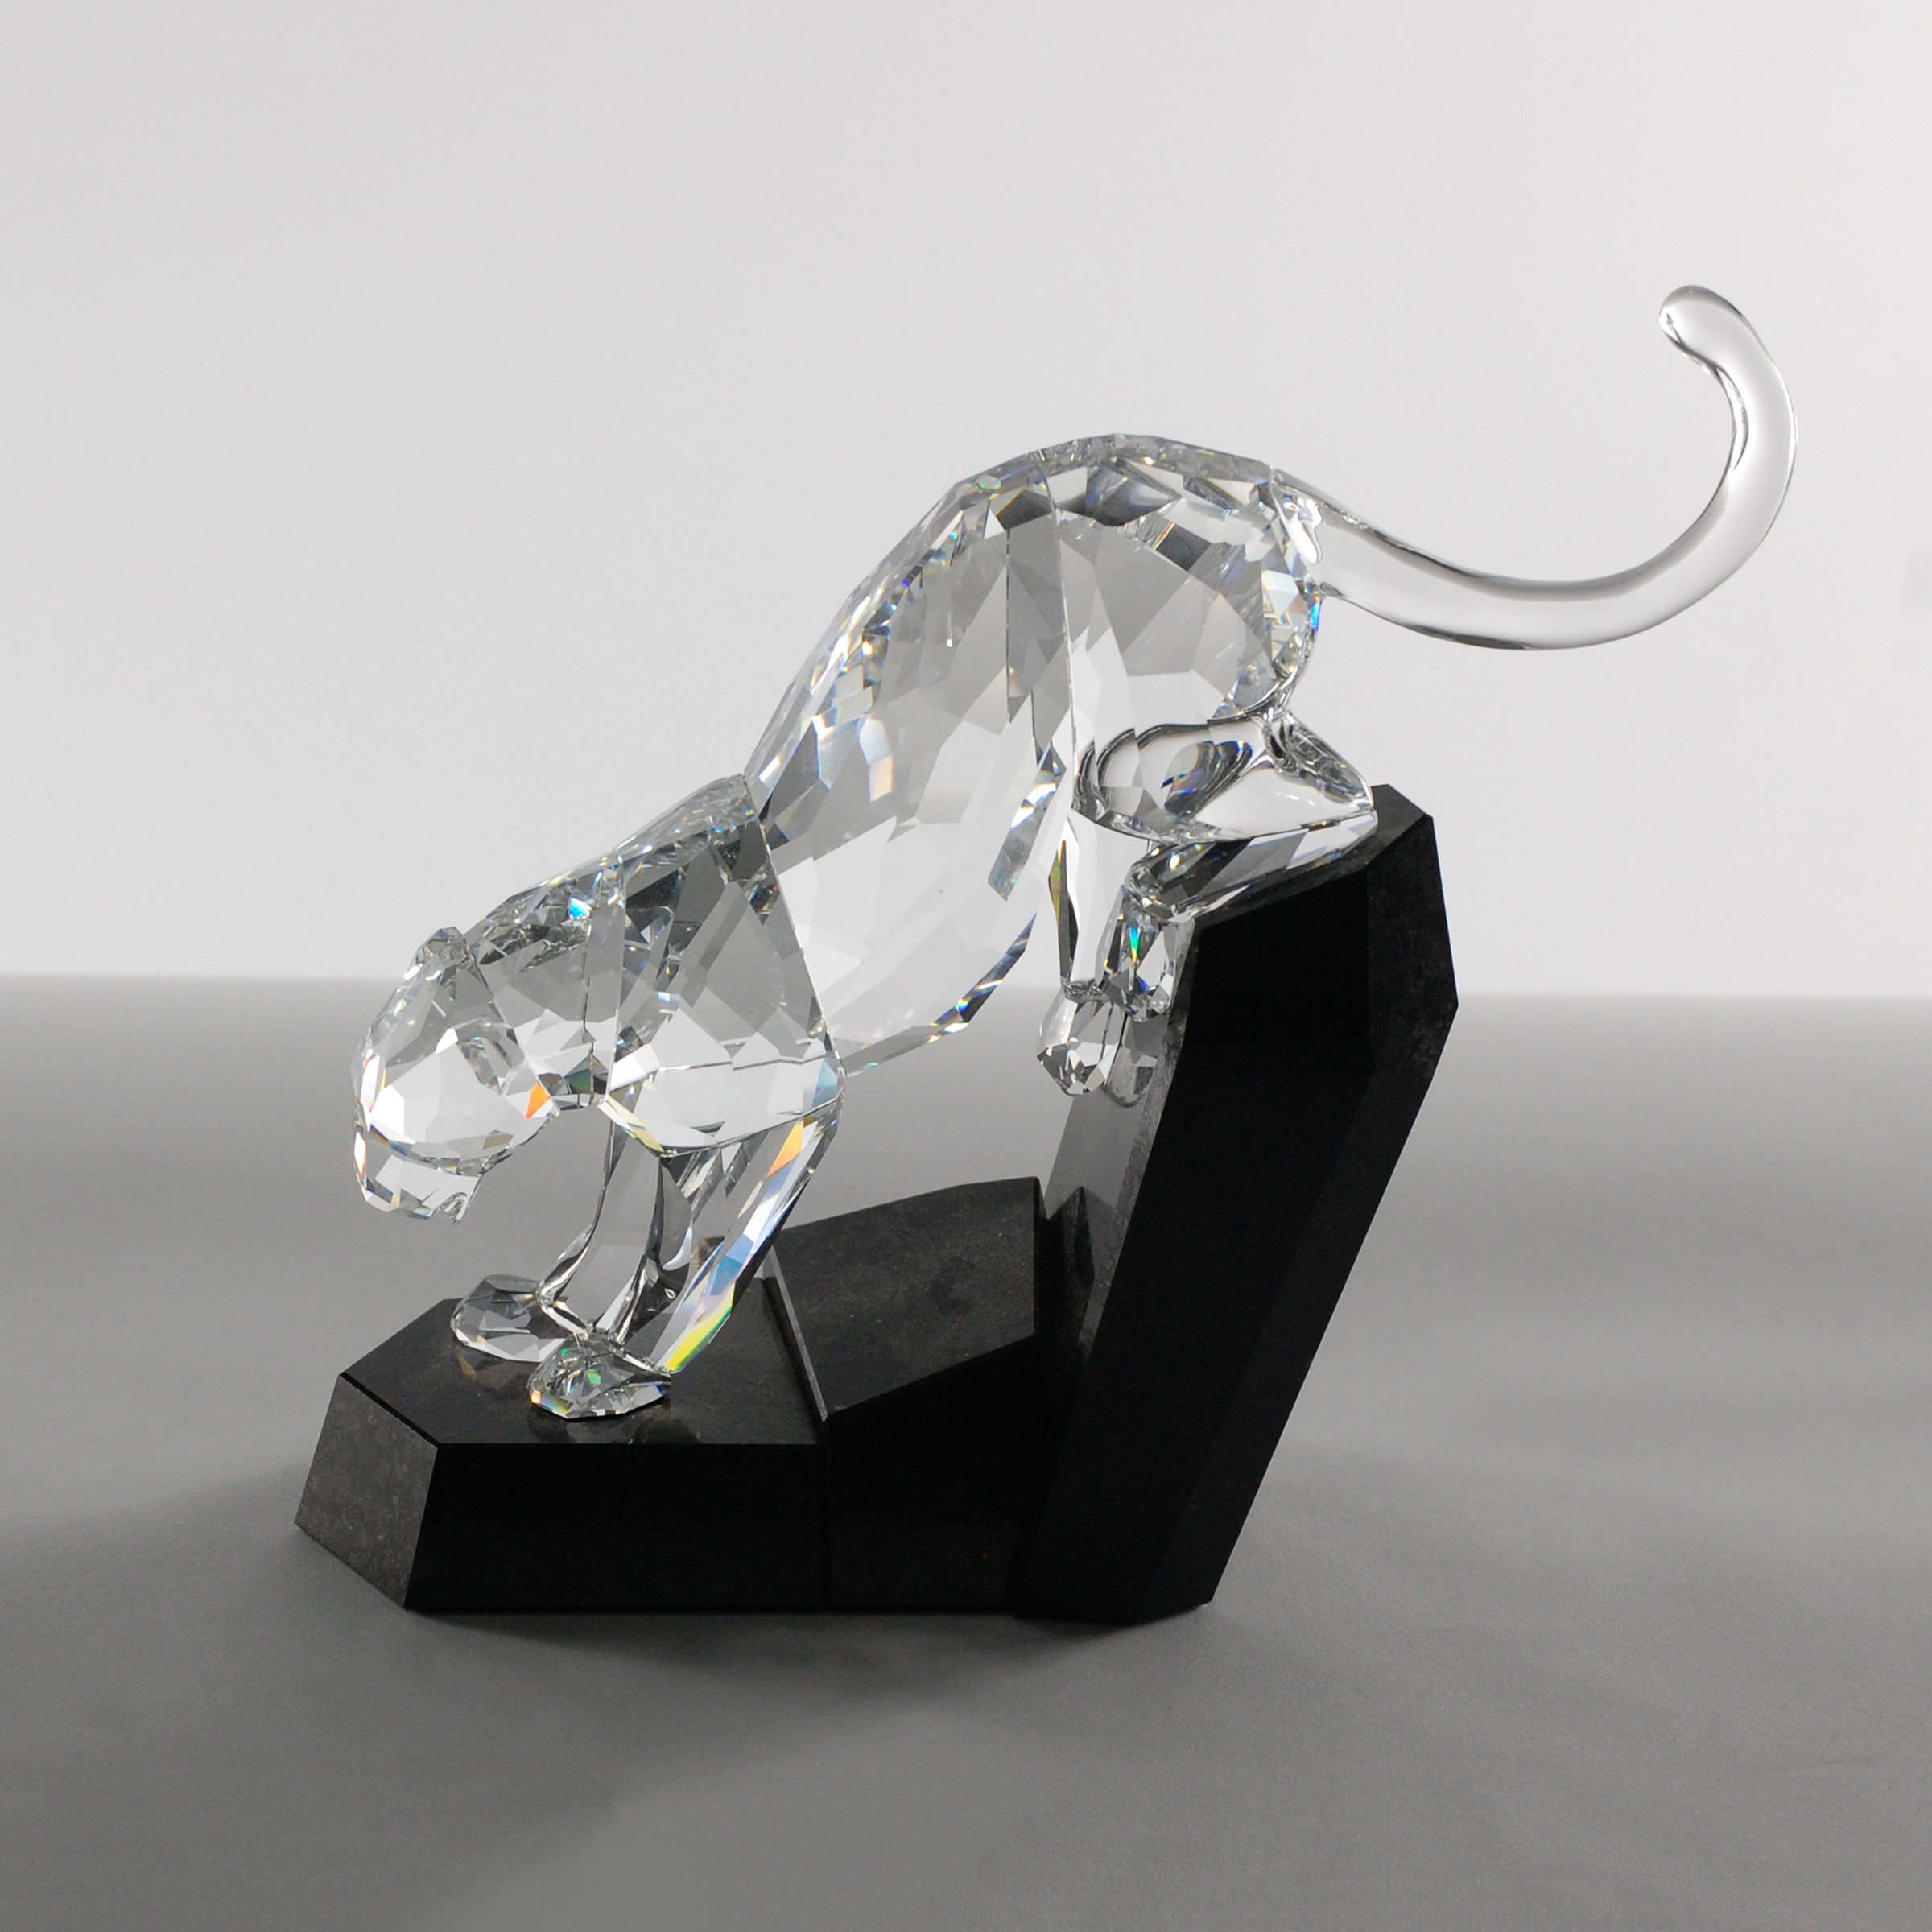 Swarovski Crystal ‘Power of Elegance’ Panther, early 21st century